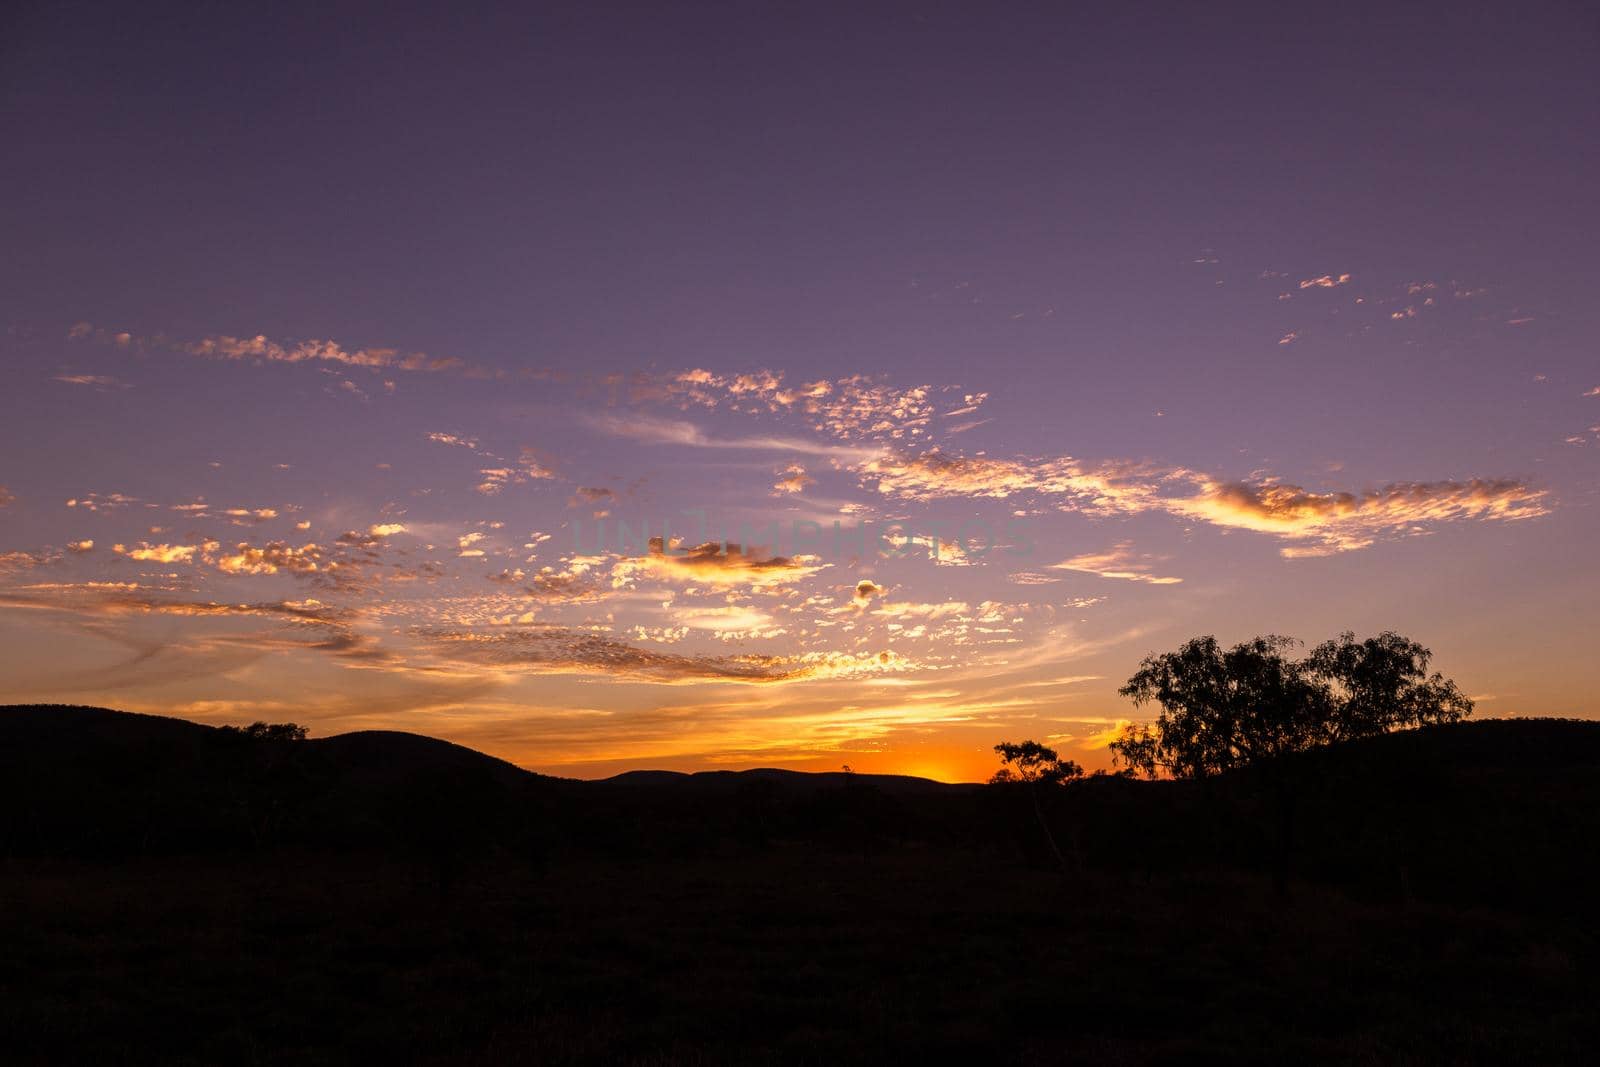 Natural Sunset Sunrise Over karijini national park. Bright Dramatic Sky And Dark Ground. Kaijiri National Park, Western Australia by bettercallcurry